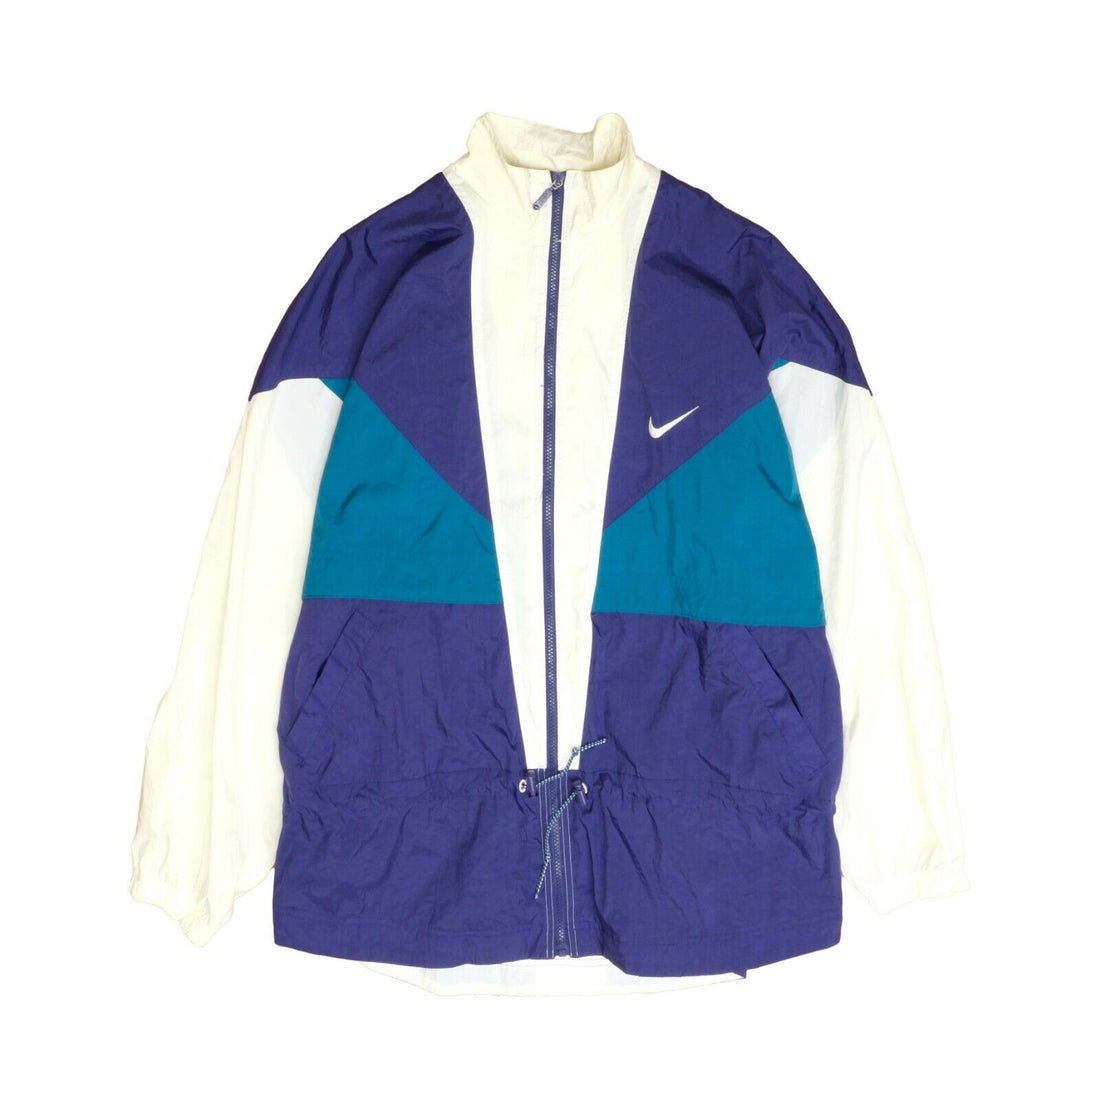 Vintage Nike Windbreaker Light Jacket Size XL Purple Teal 90s